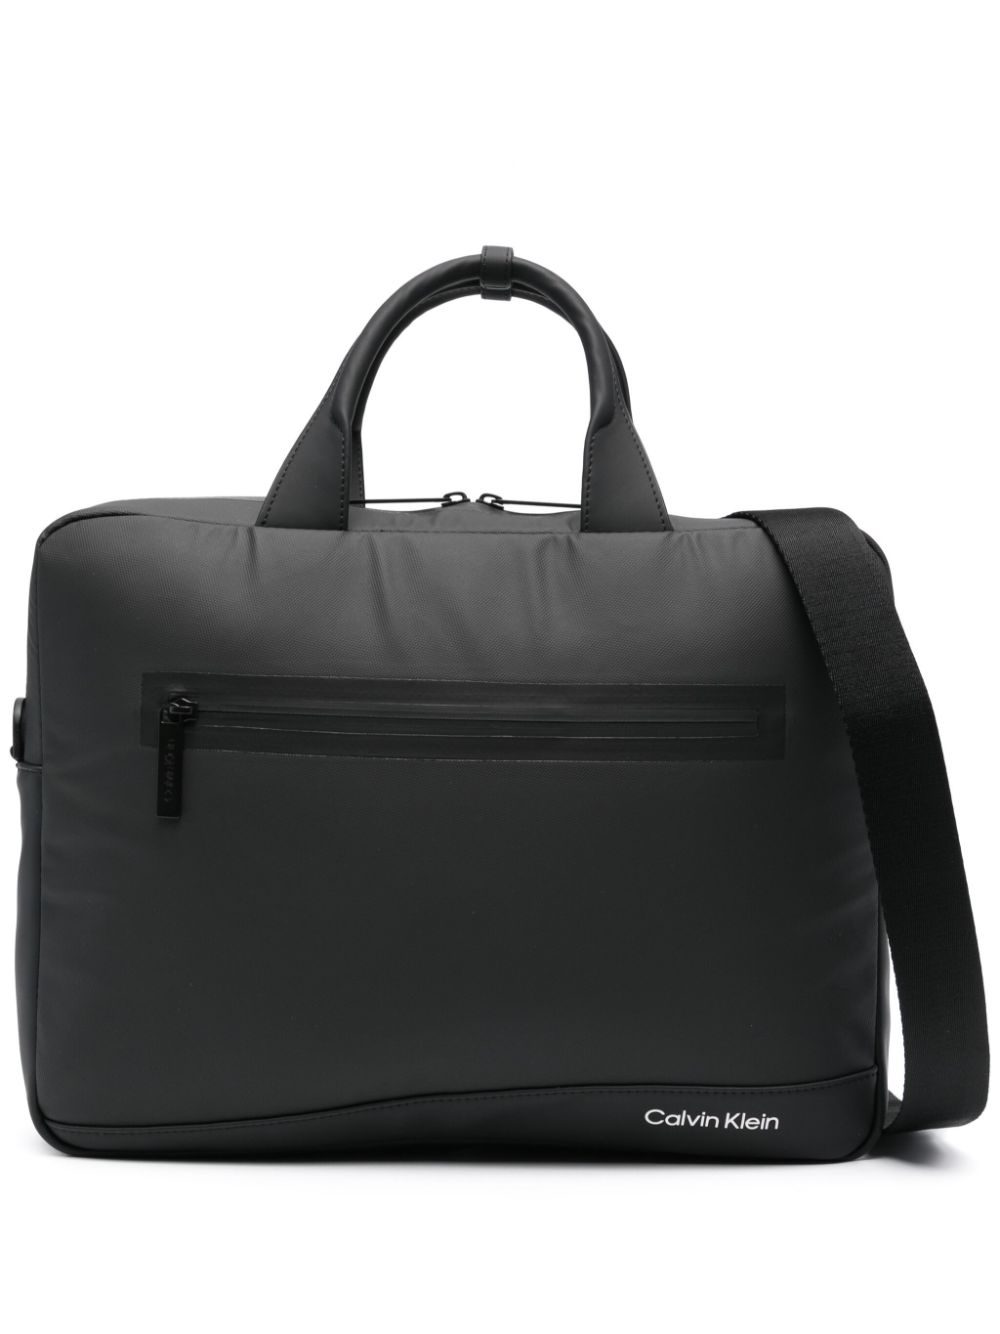 Calvin Klein Leather Laptop Bag In Black